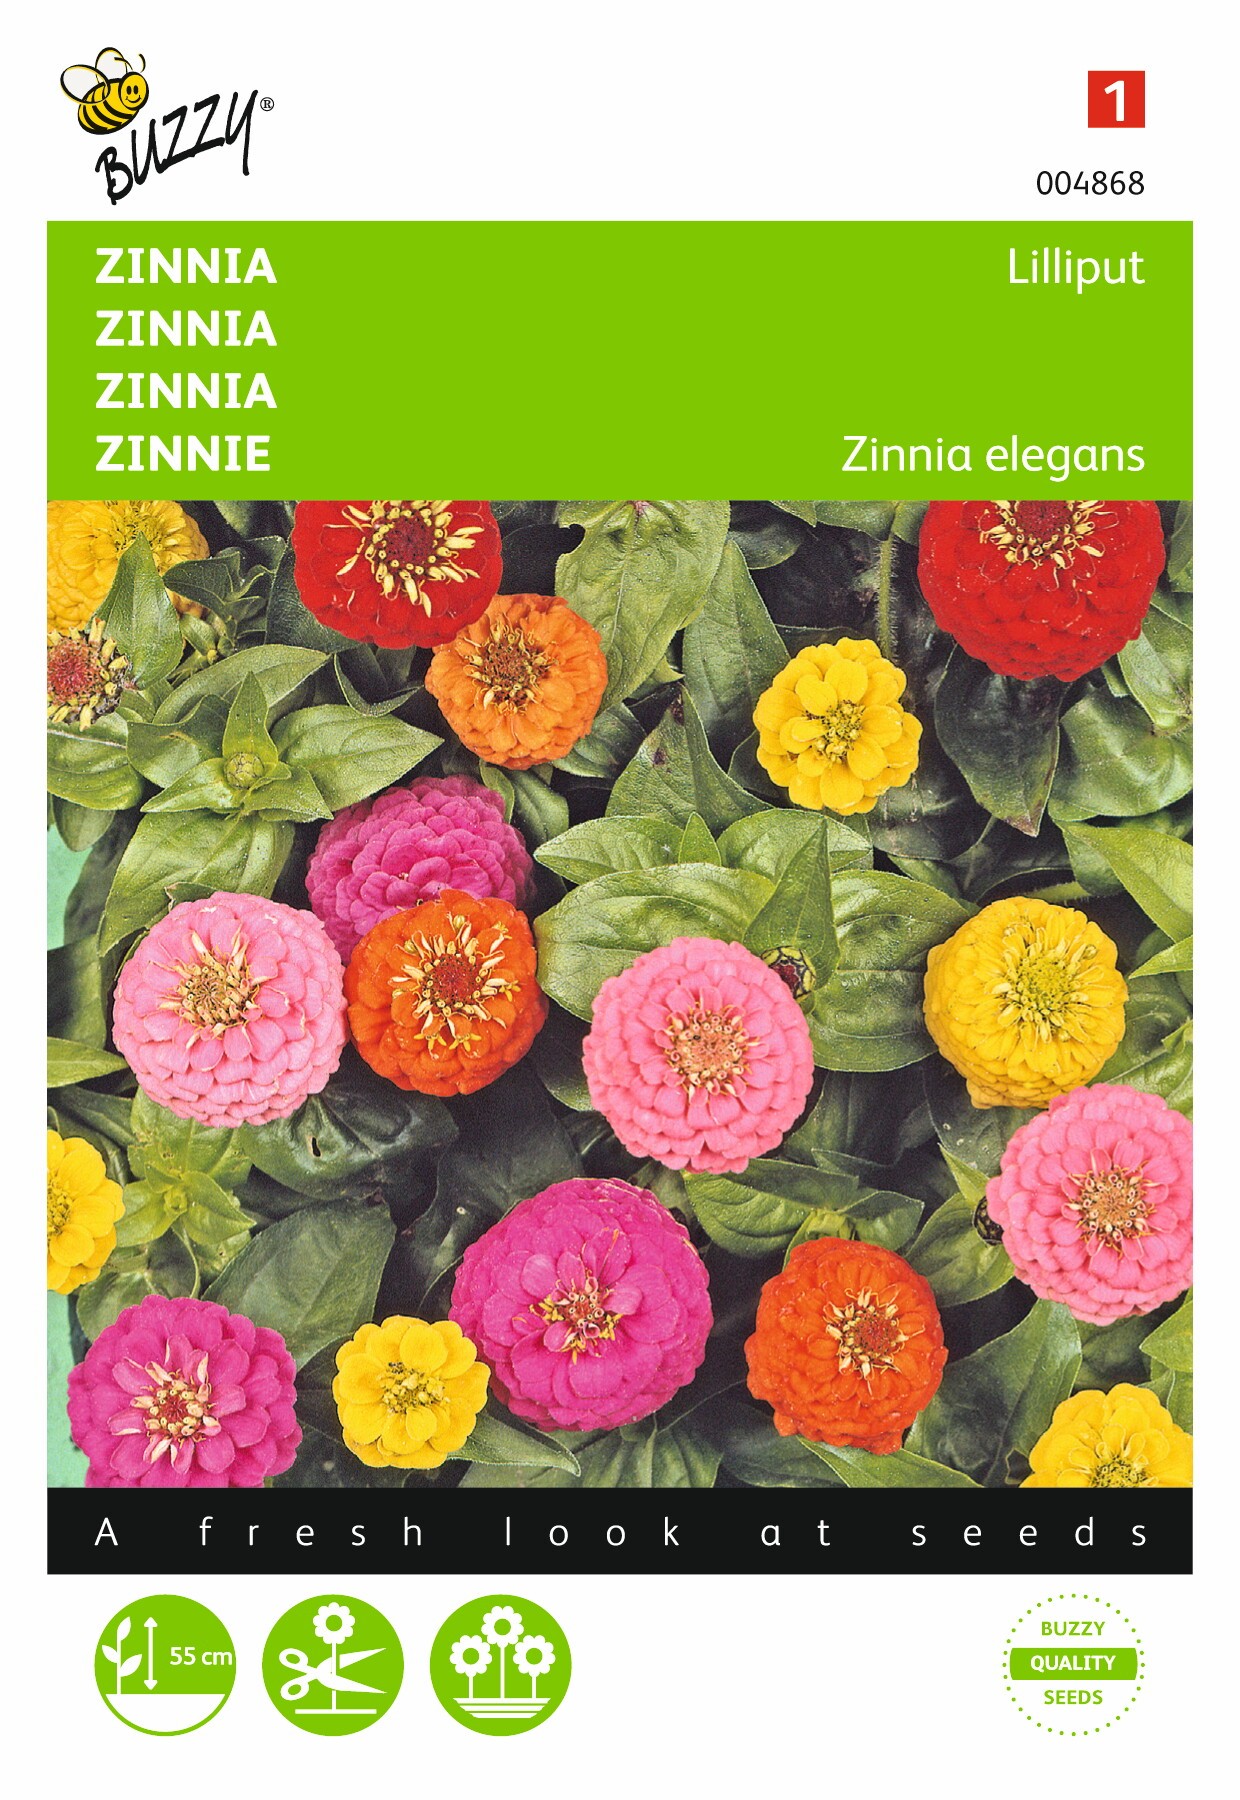 https://www.warentuin.nl/media/catalog/product/1/7/1778711117048688_buzzy_seeds_tuinzaden_buzzy_zinnia_lilliput_gemengd_1_0ca6.jpeg